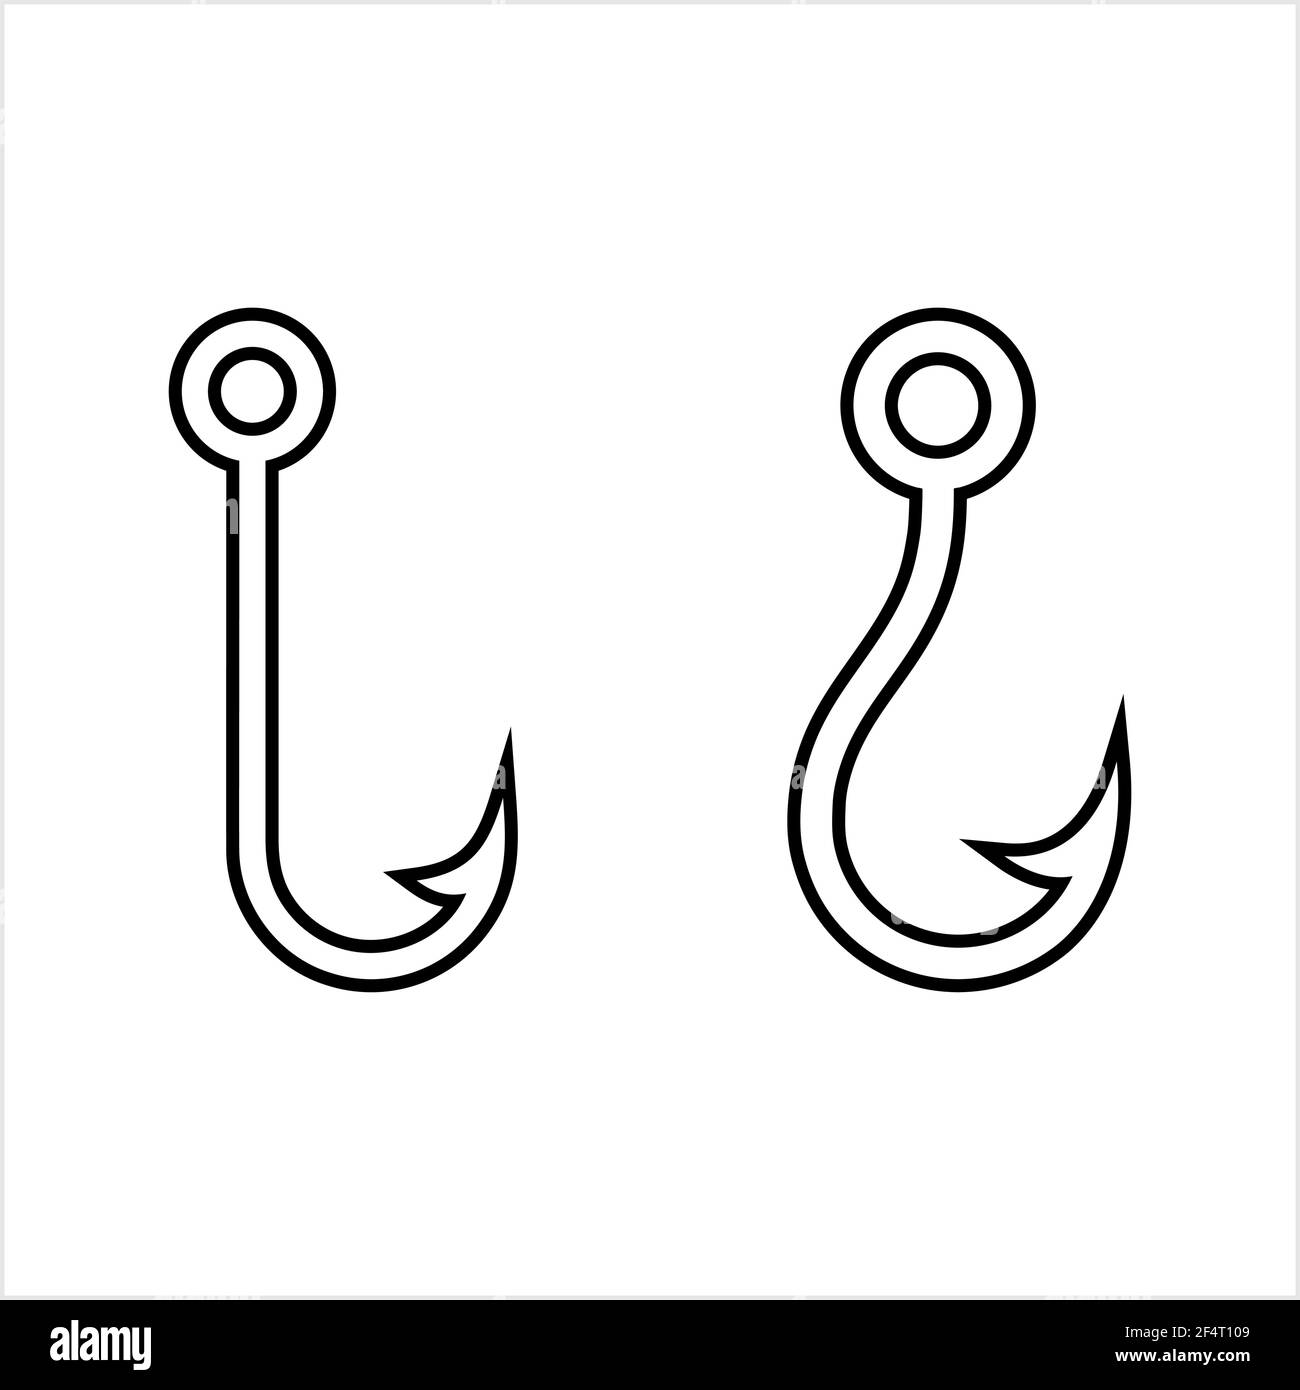 rapalas fishing hook illustration vector Stock Vector Image & Art - Alamy